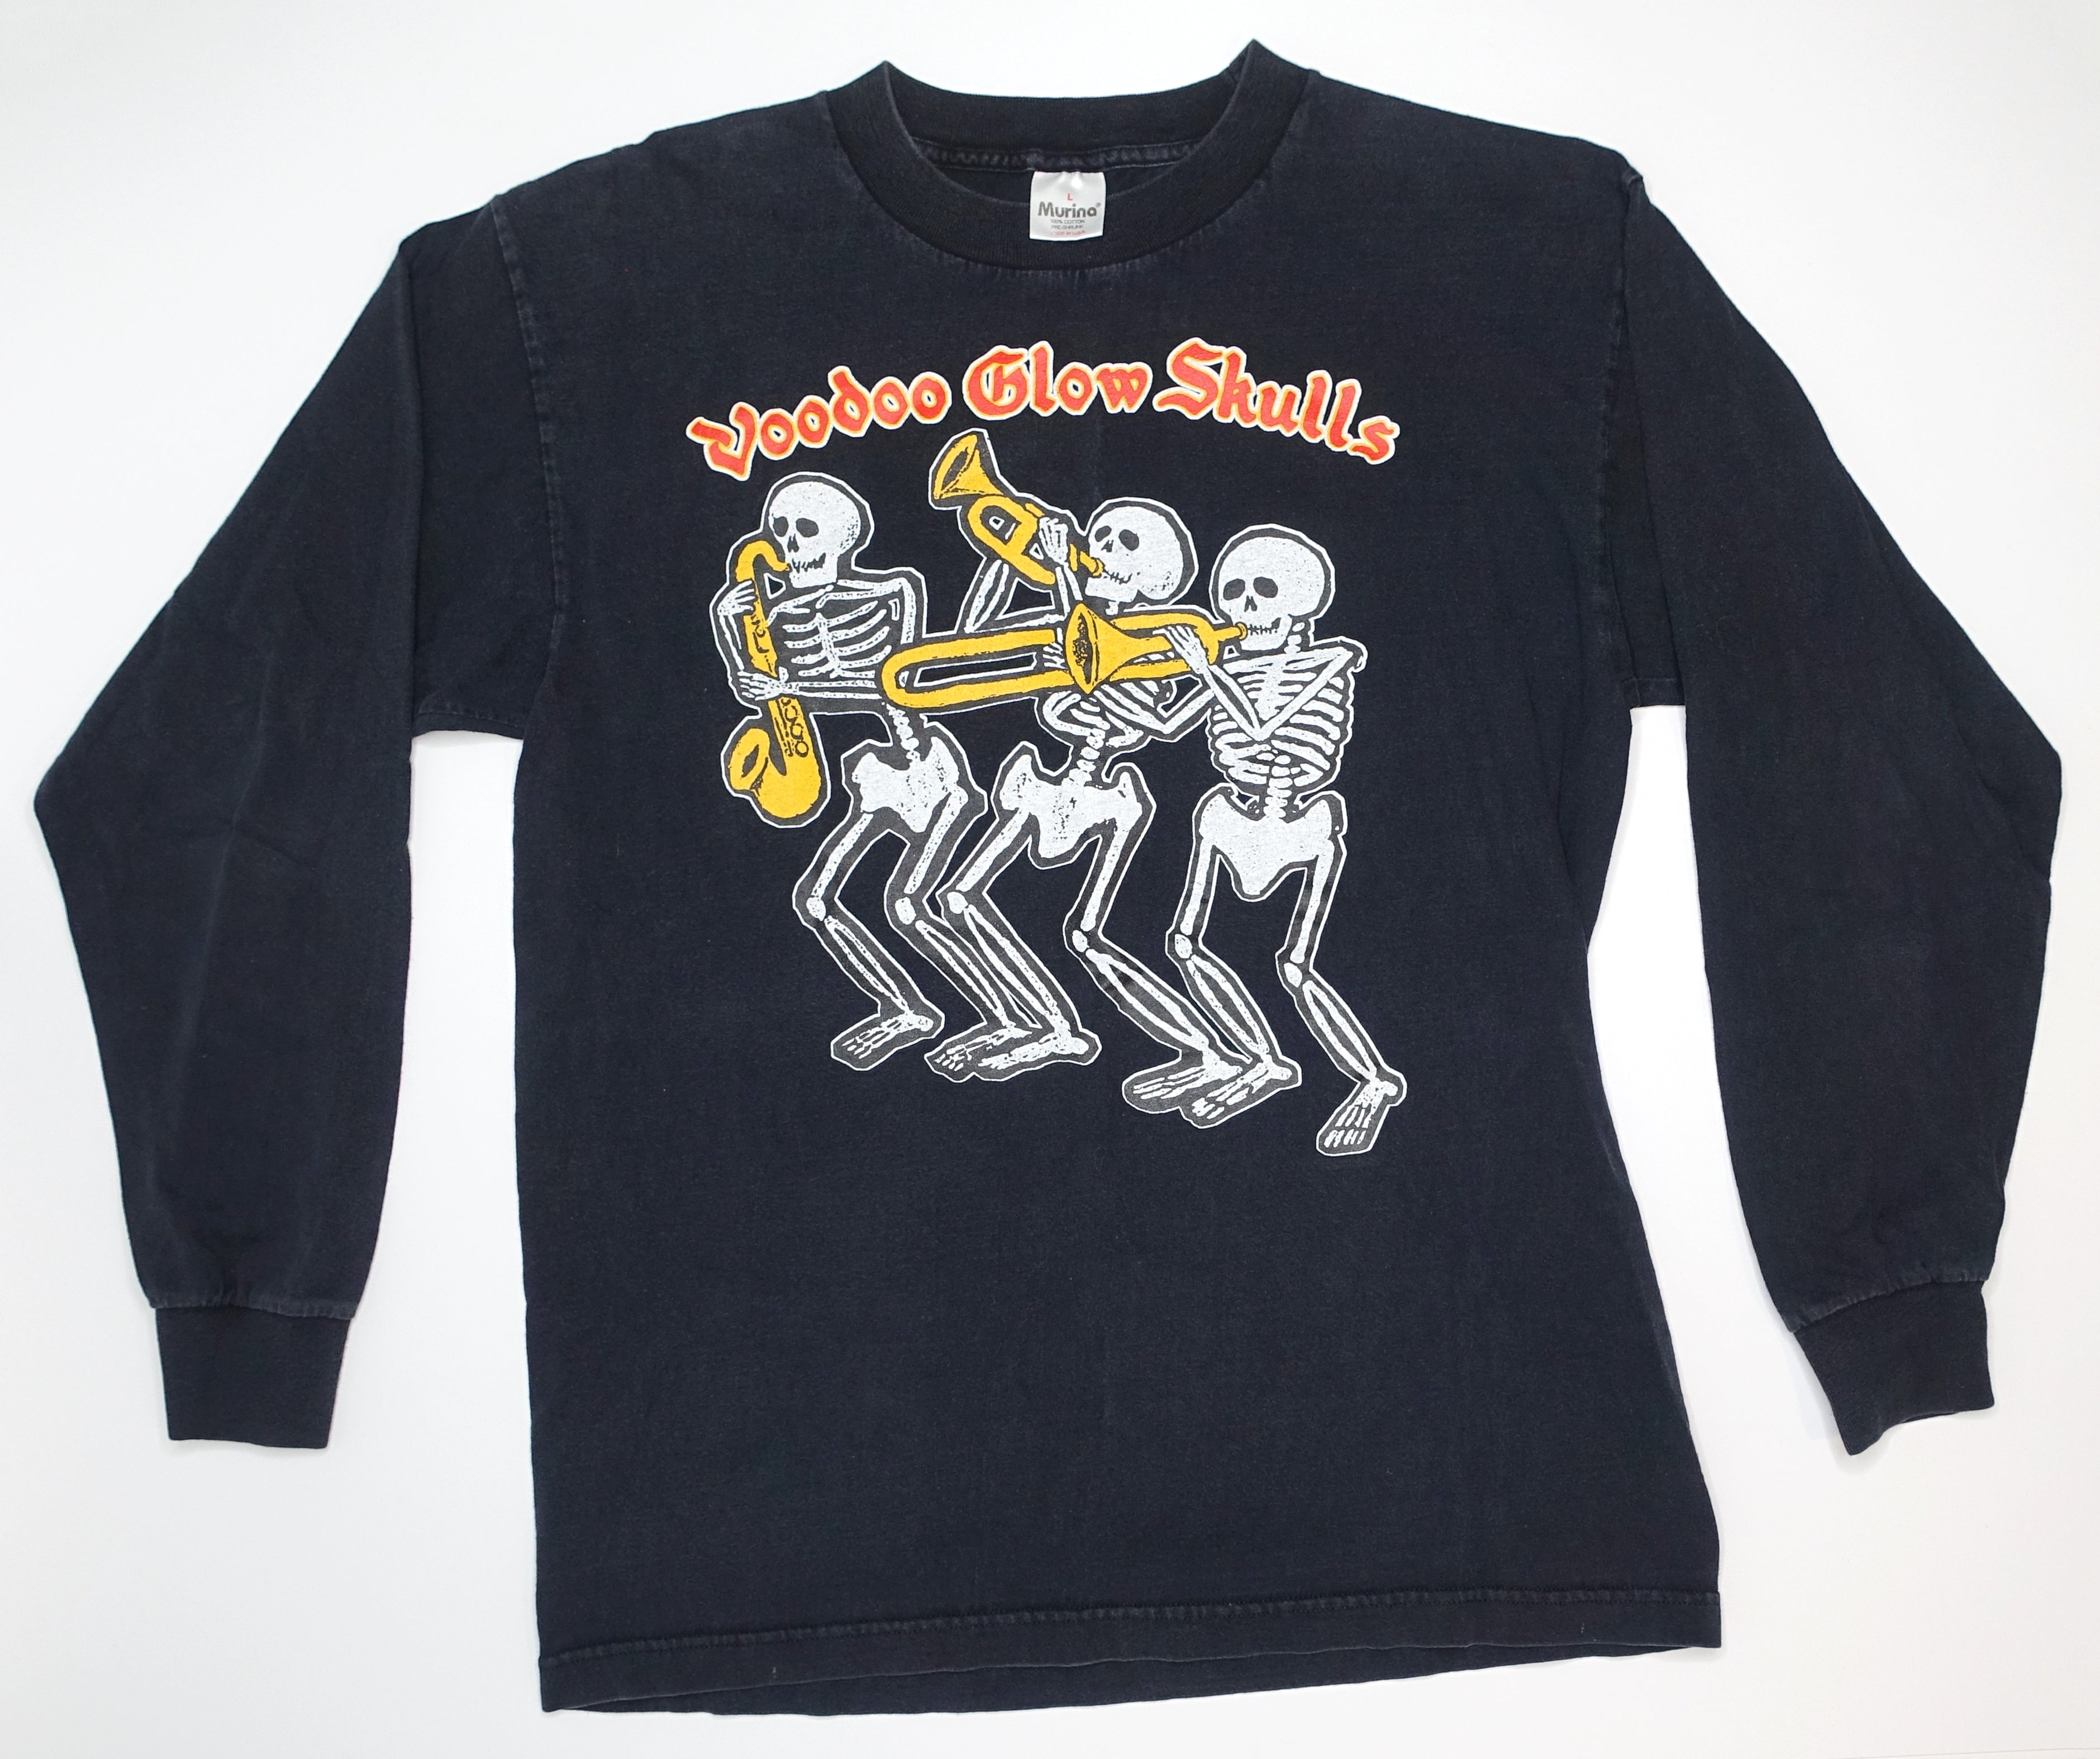 Voodoo Glow Skulls – Firme 1995 Tour Long Sleeve Shirt Size Large